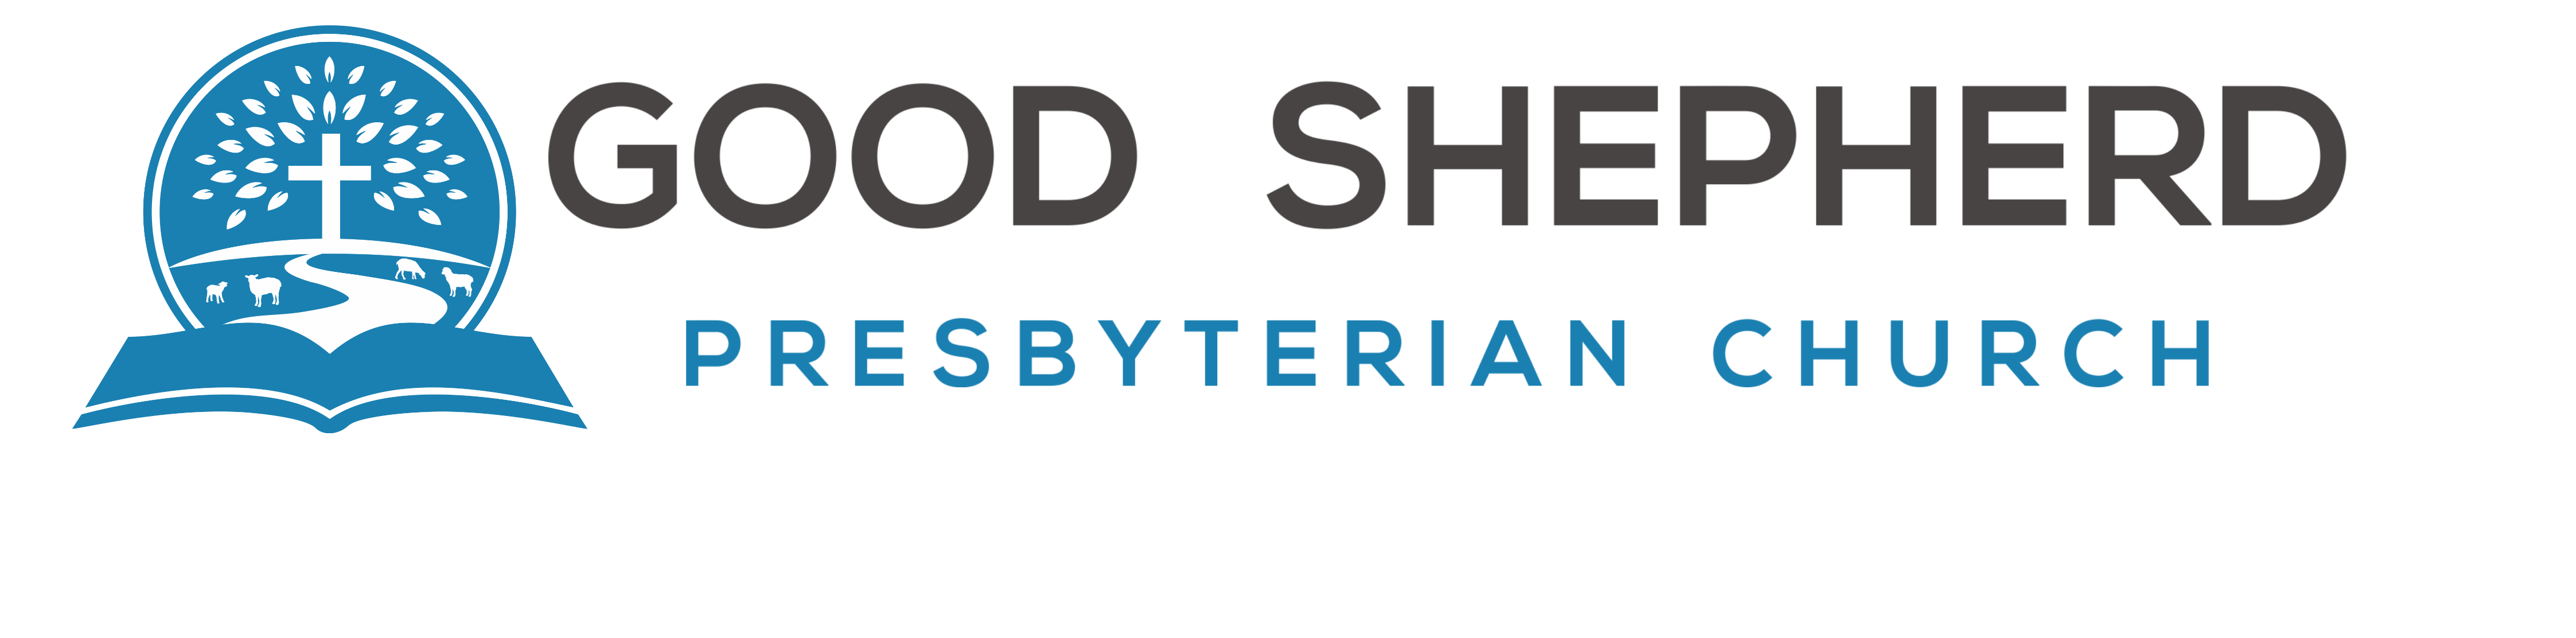 Good Shepherd Presbyterian Church in Kalamazoo and Portage, MI Logo